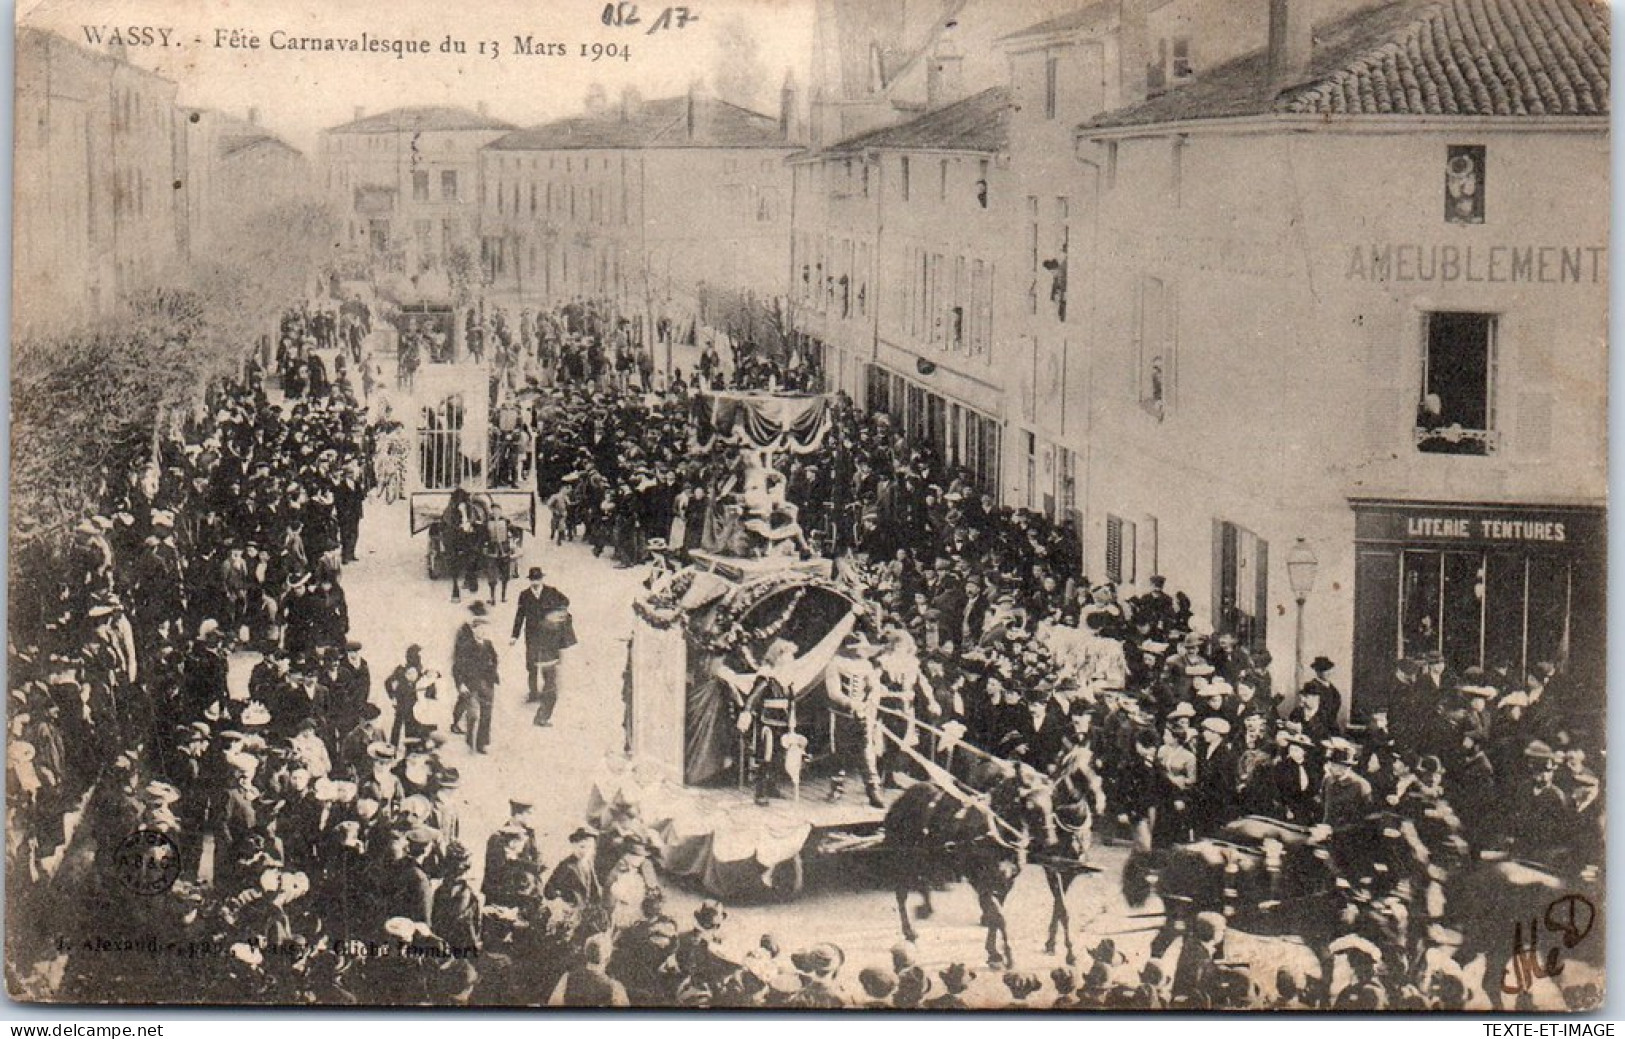 52 WASSY - Fete Carnavalesque Du 13 Mars 1904 - Wassy